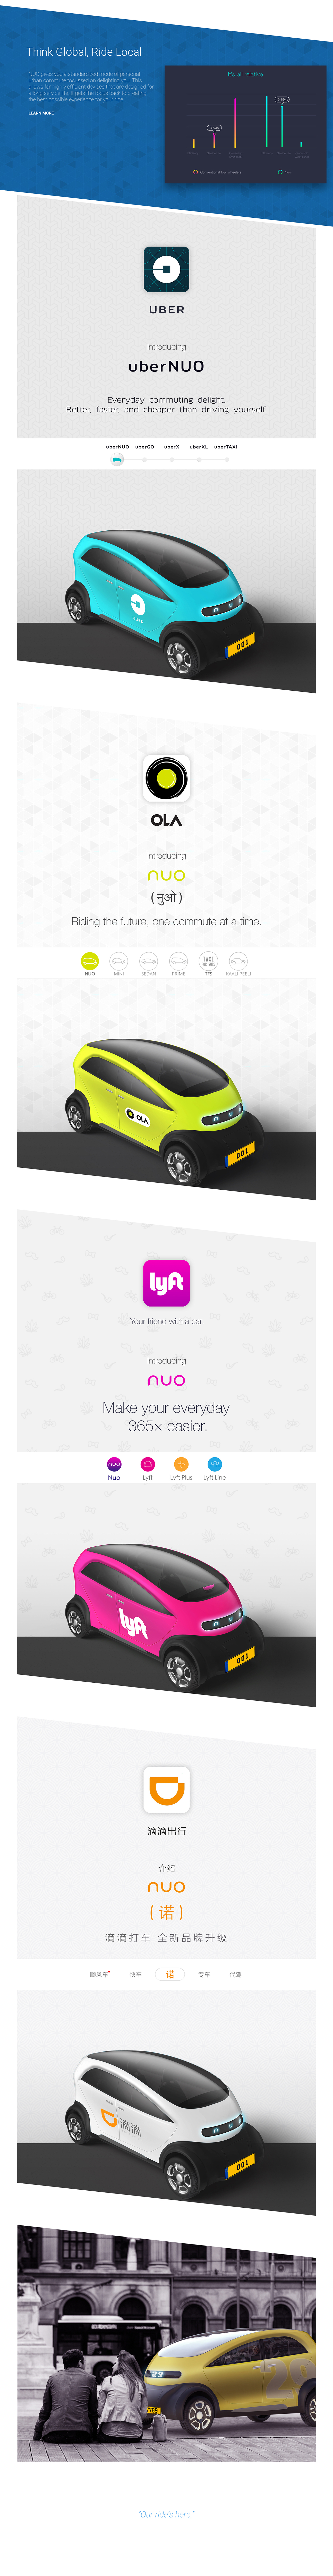 Autonomous Uber lyft OLA didi chuxing ride-sharing cab disruptive Product experience electric apple car urban mobility killer app commuting Last Mile